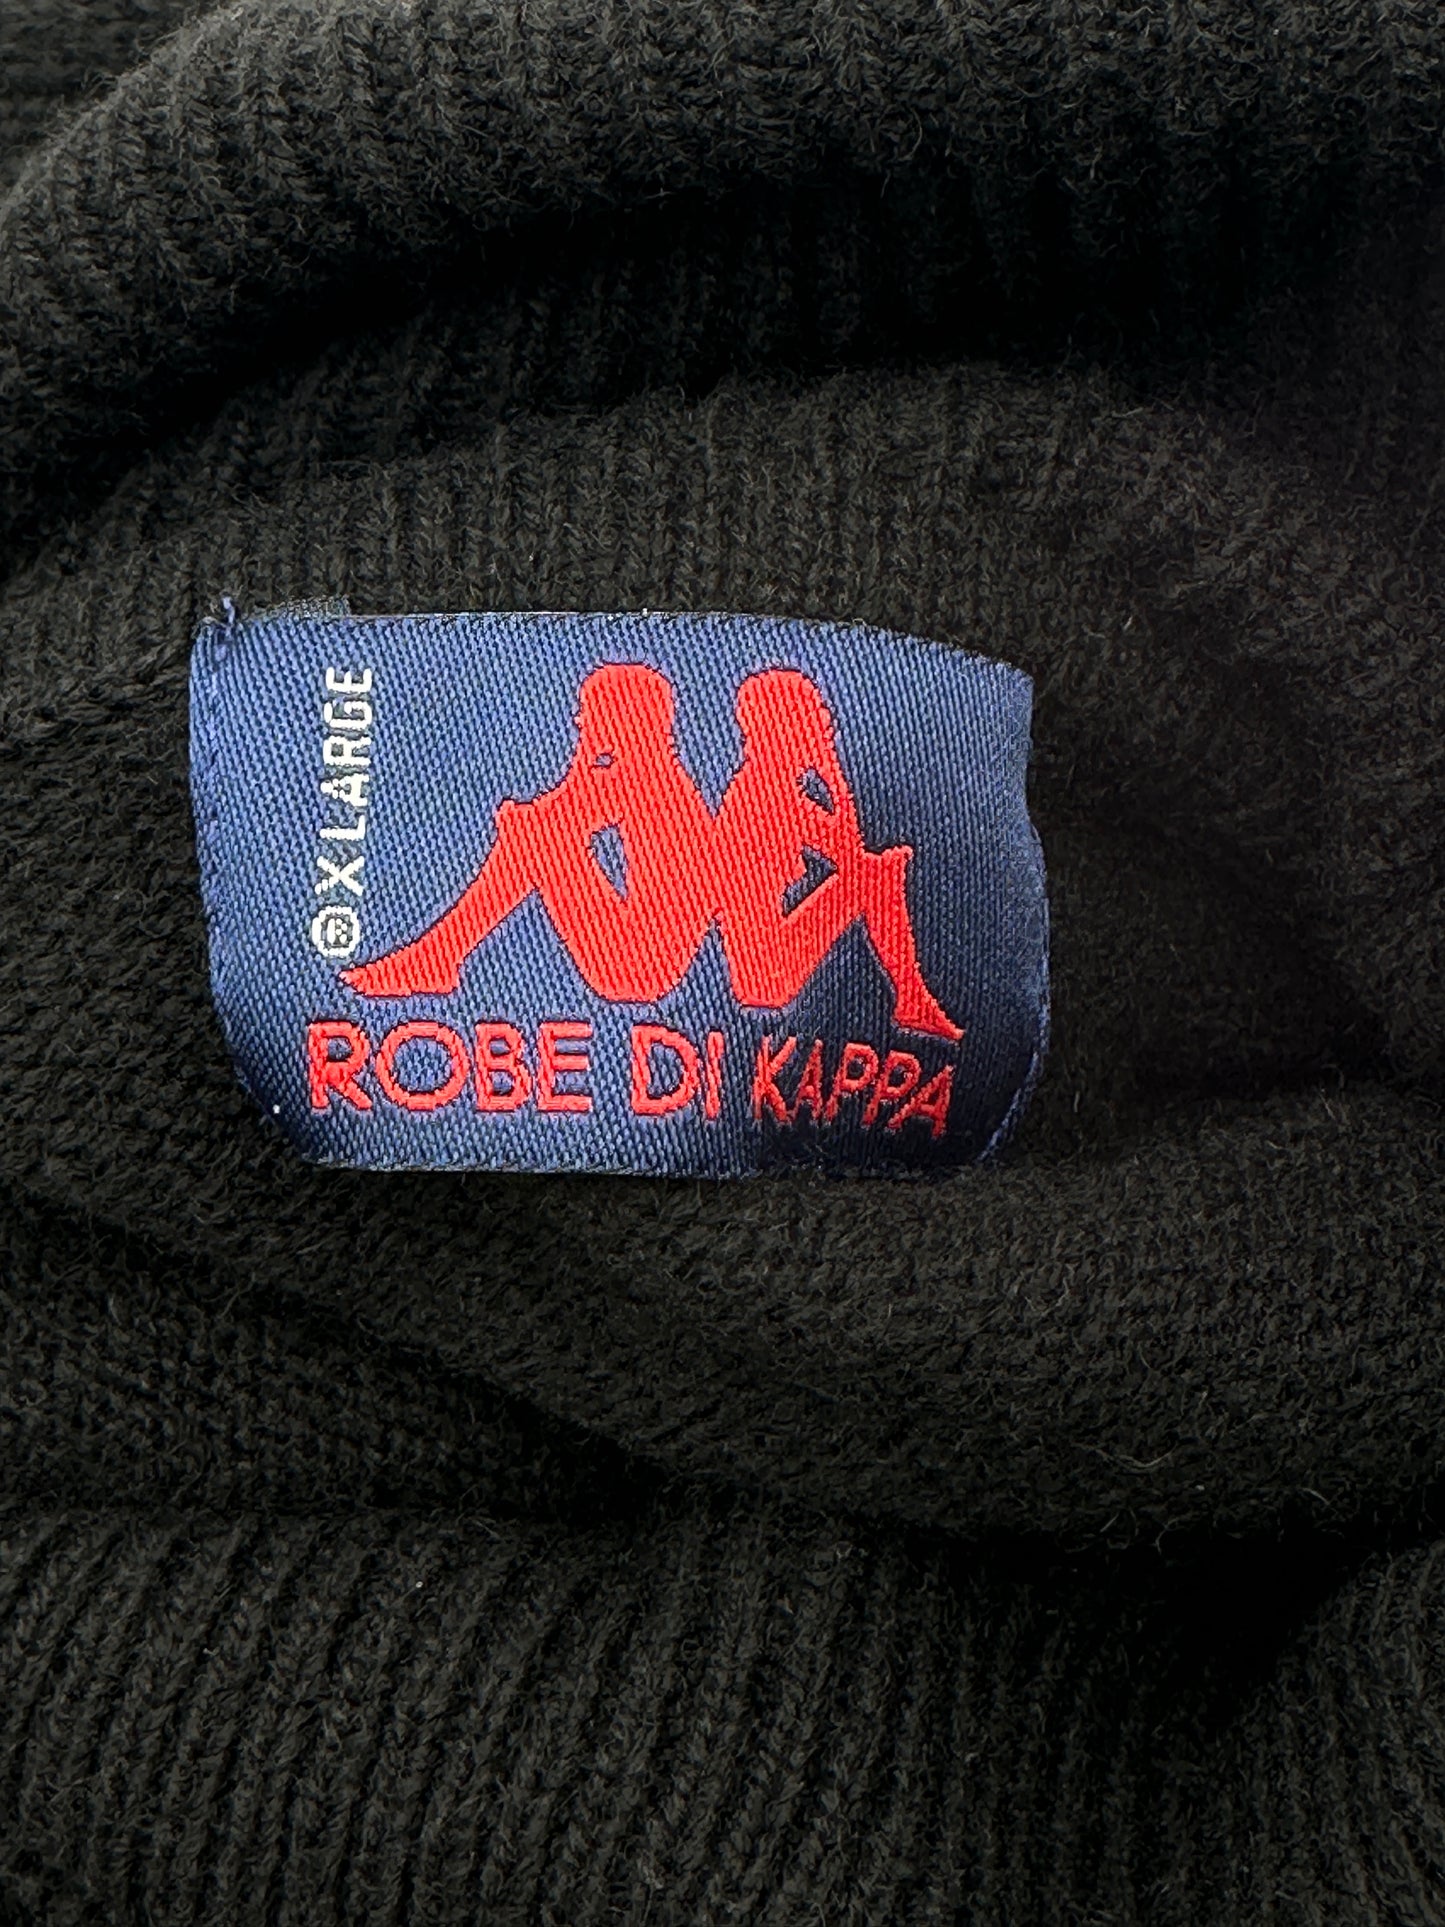 Robe Di Kappa Size XL Black Lambs Wool Turtleneck Sweater